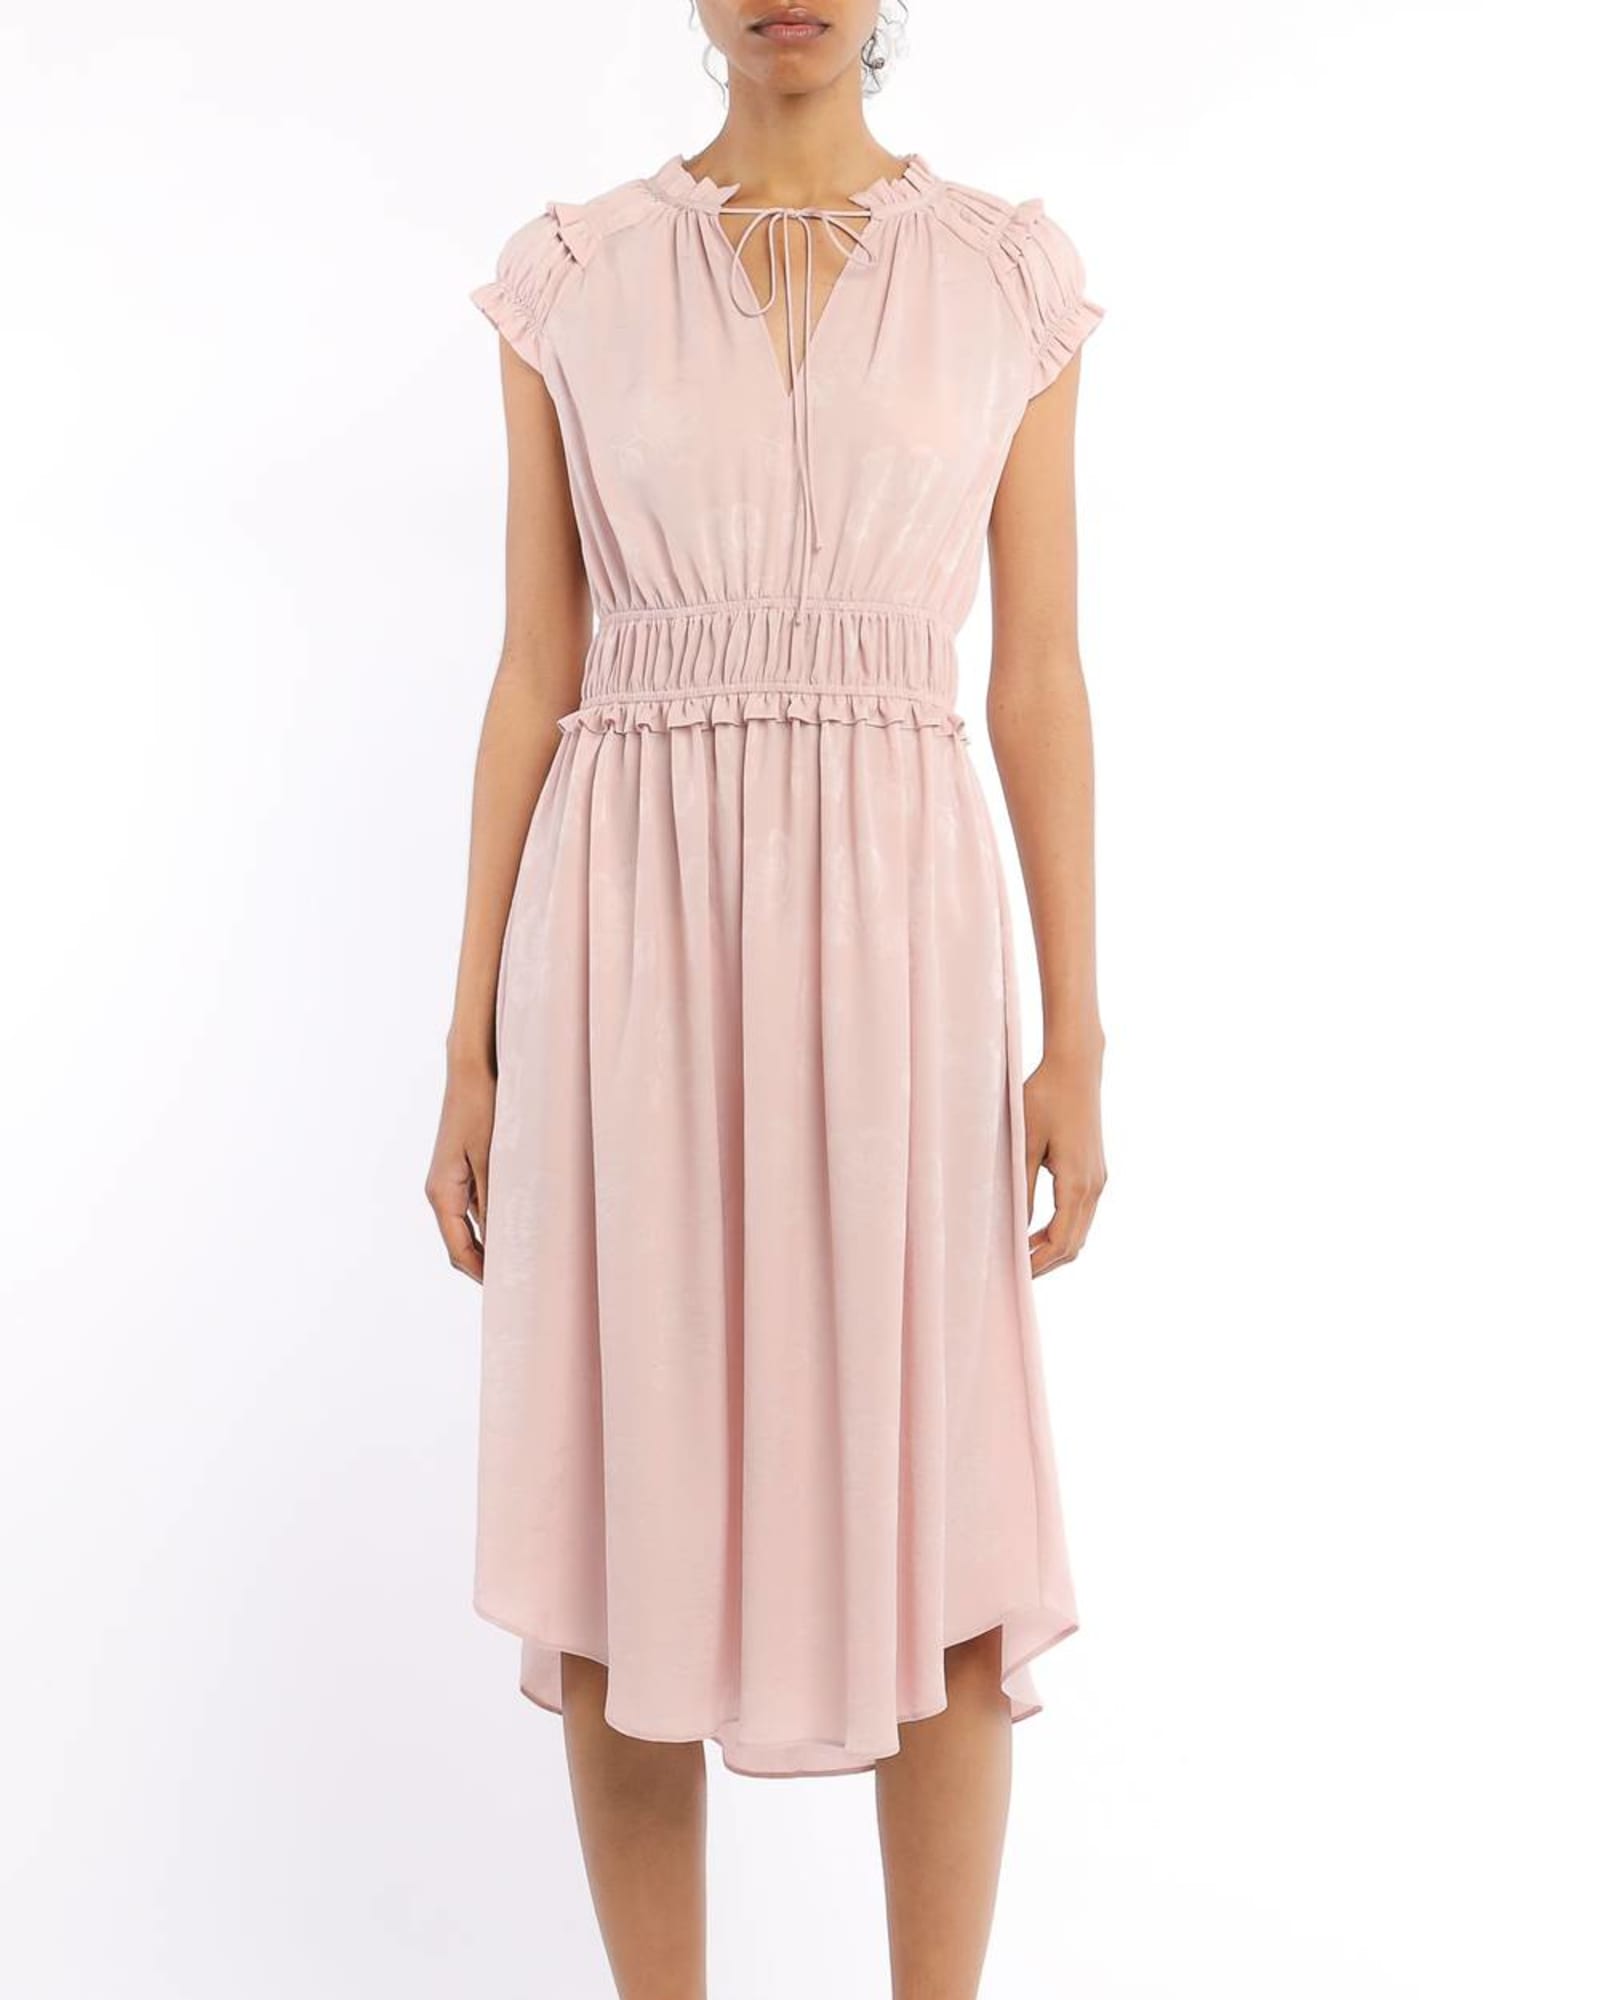 Plus Size Light Pink Dress